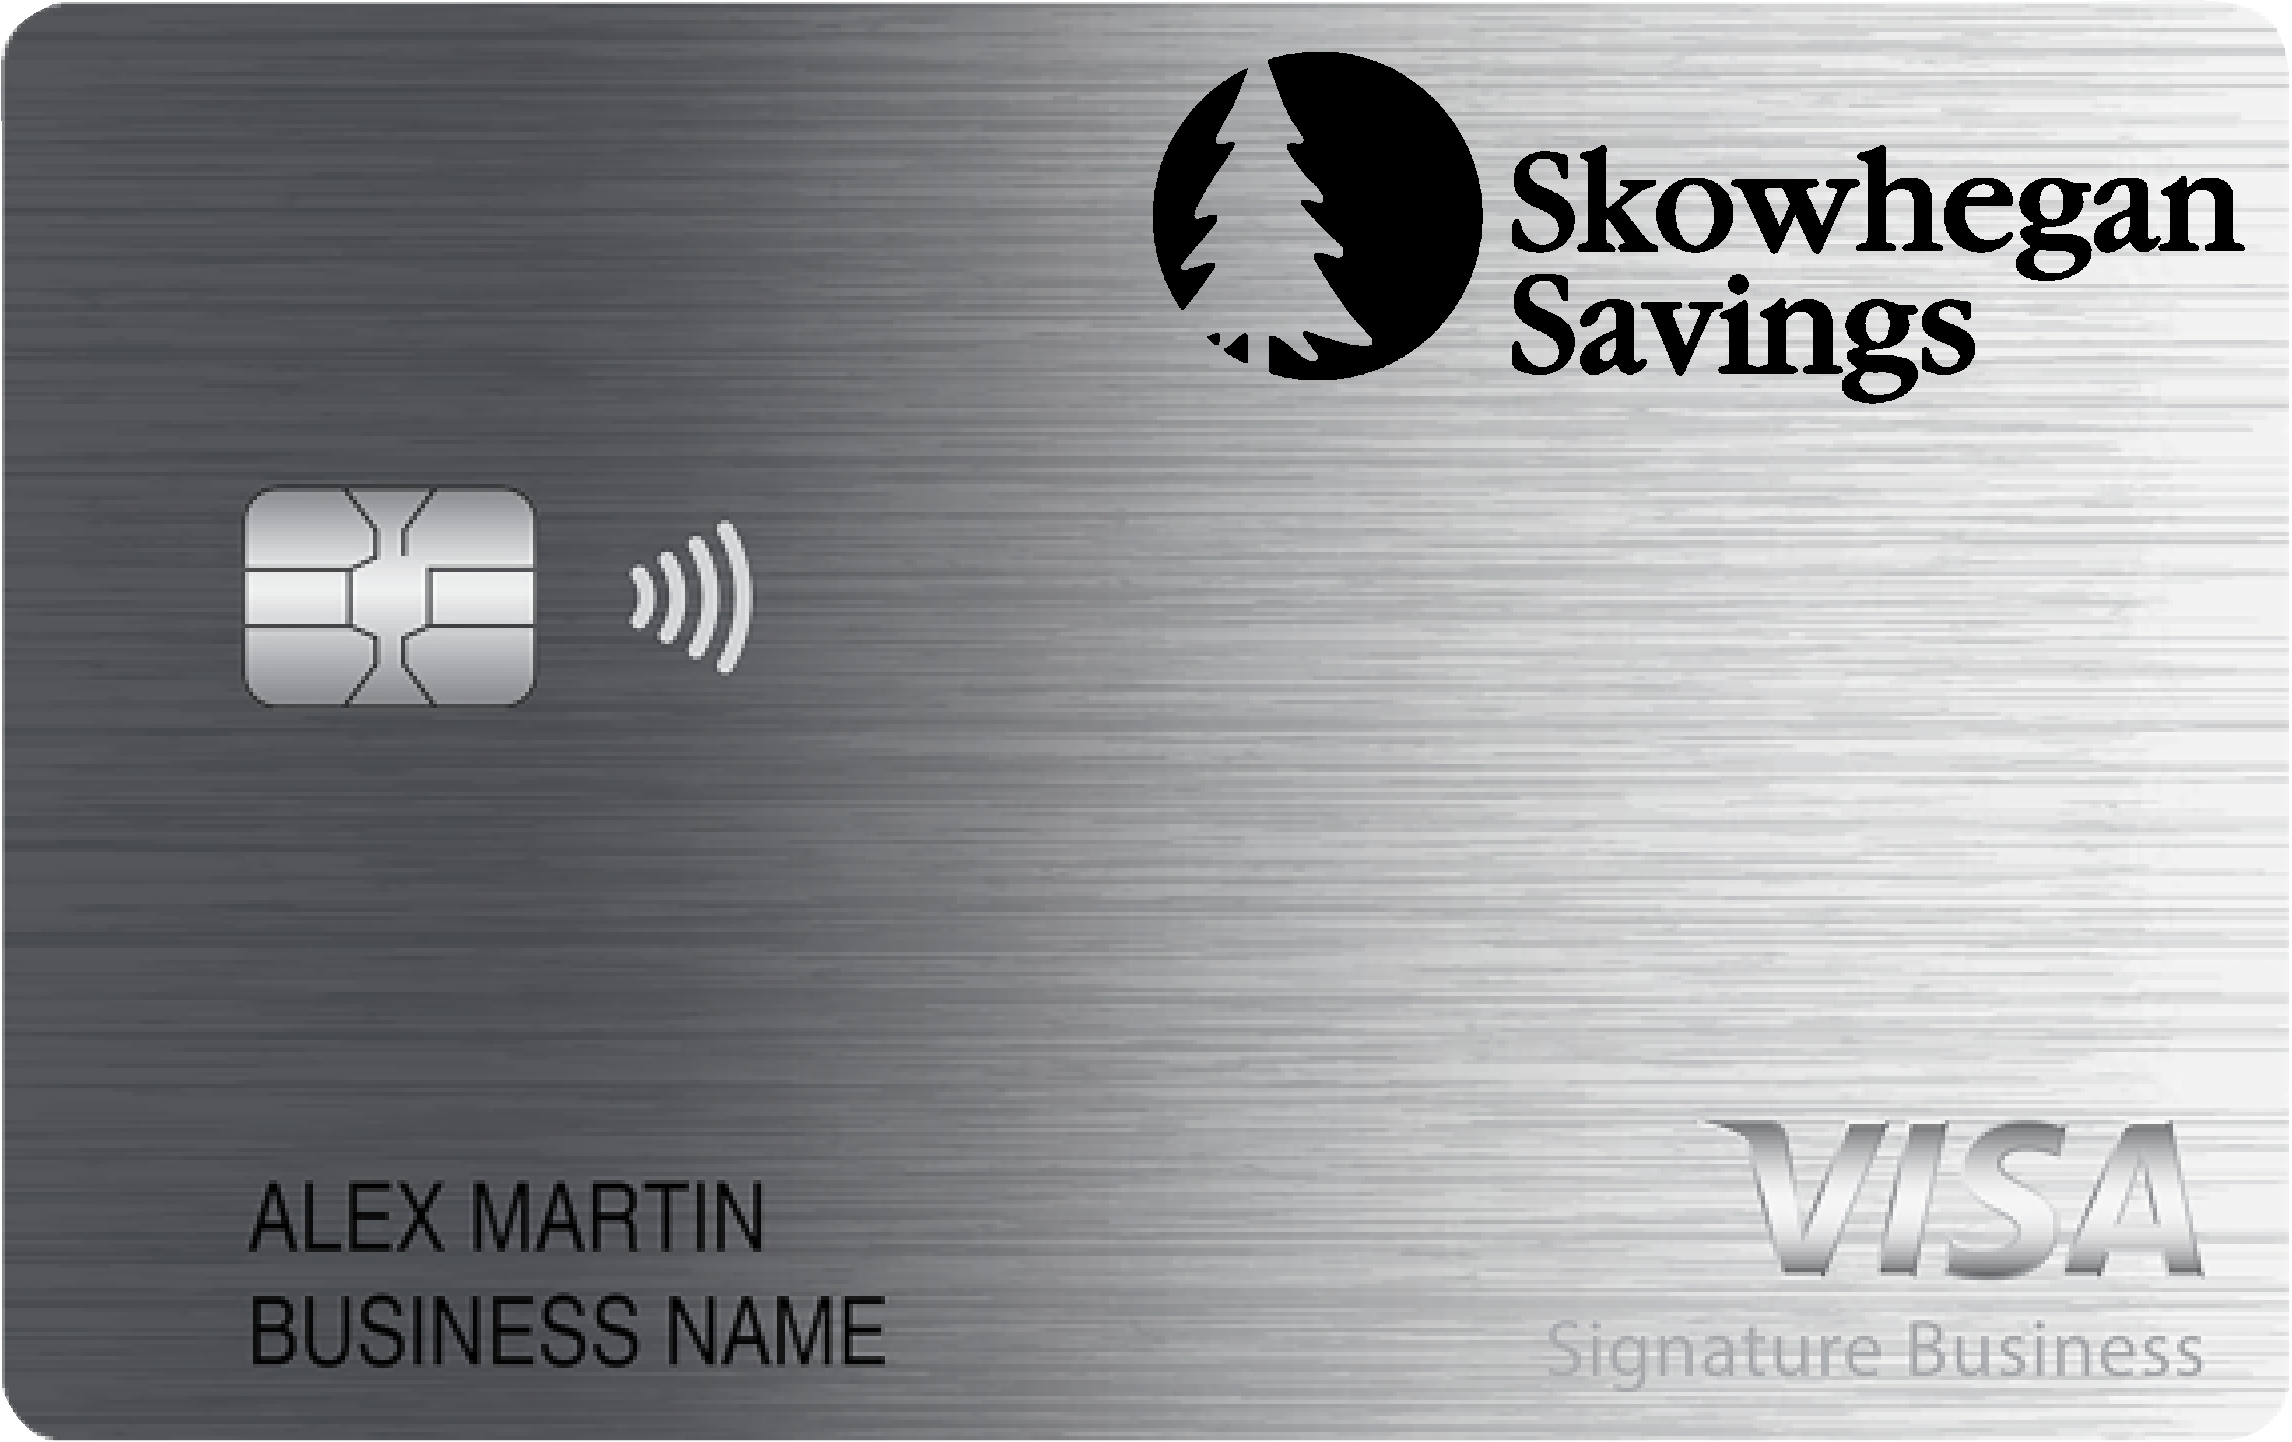 Skowhegan Savings Bank Smart Business Rewards Card